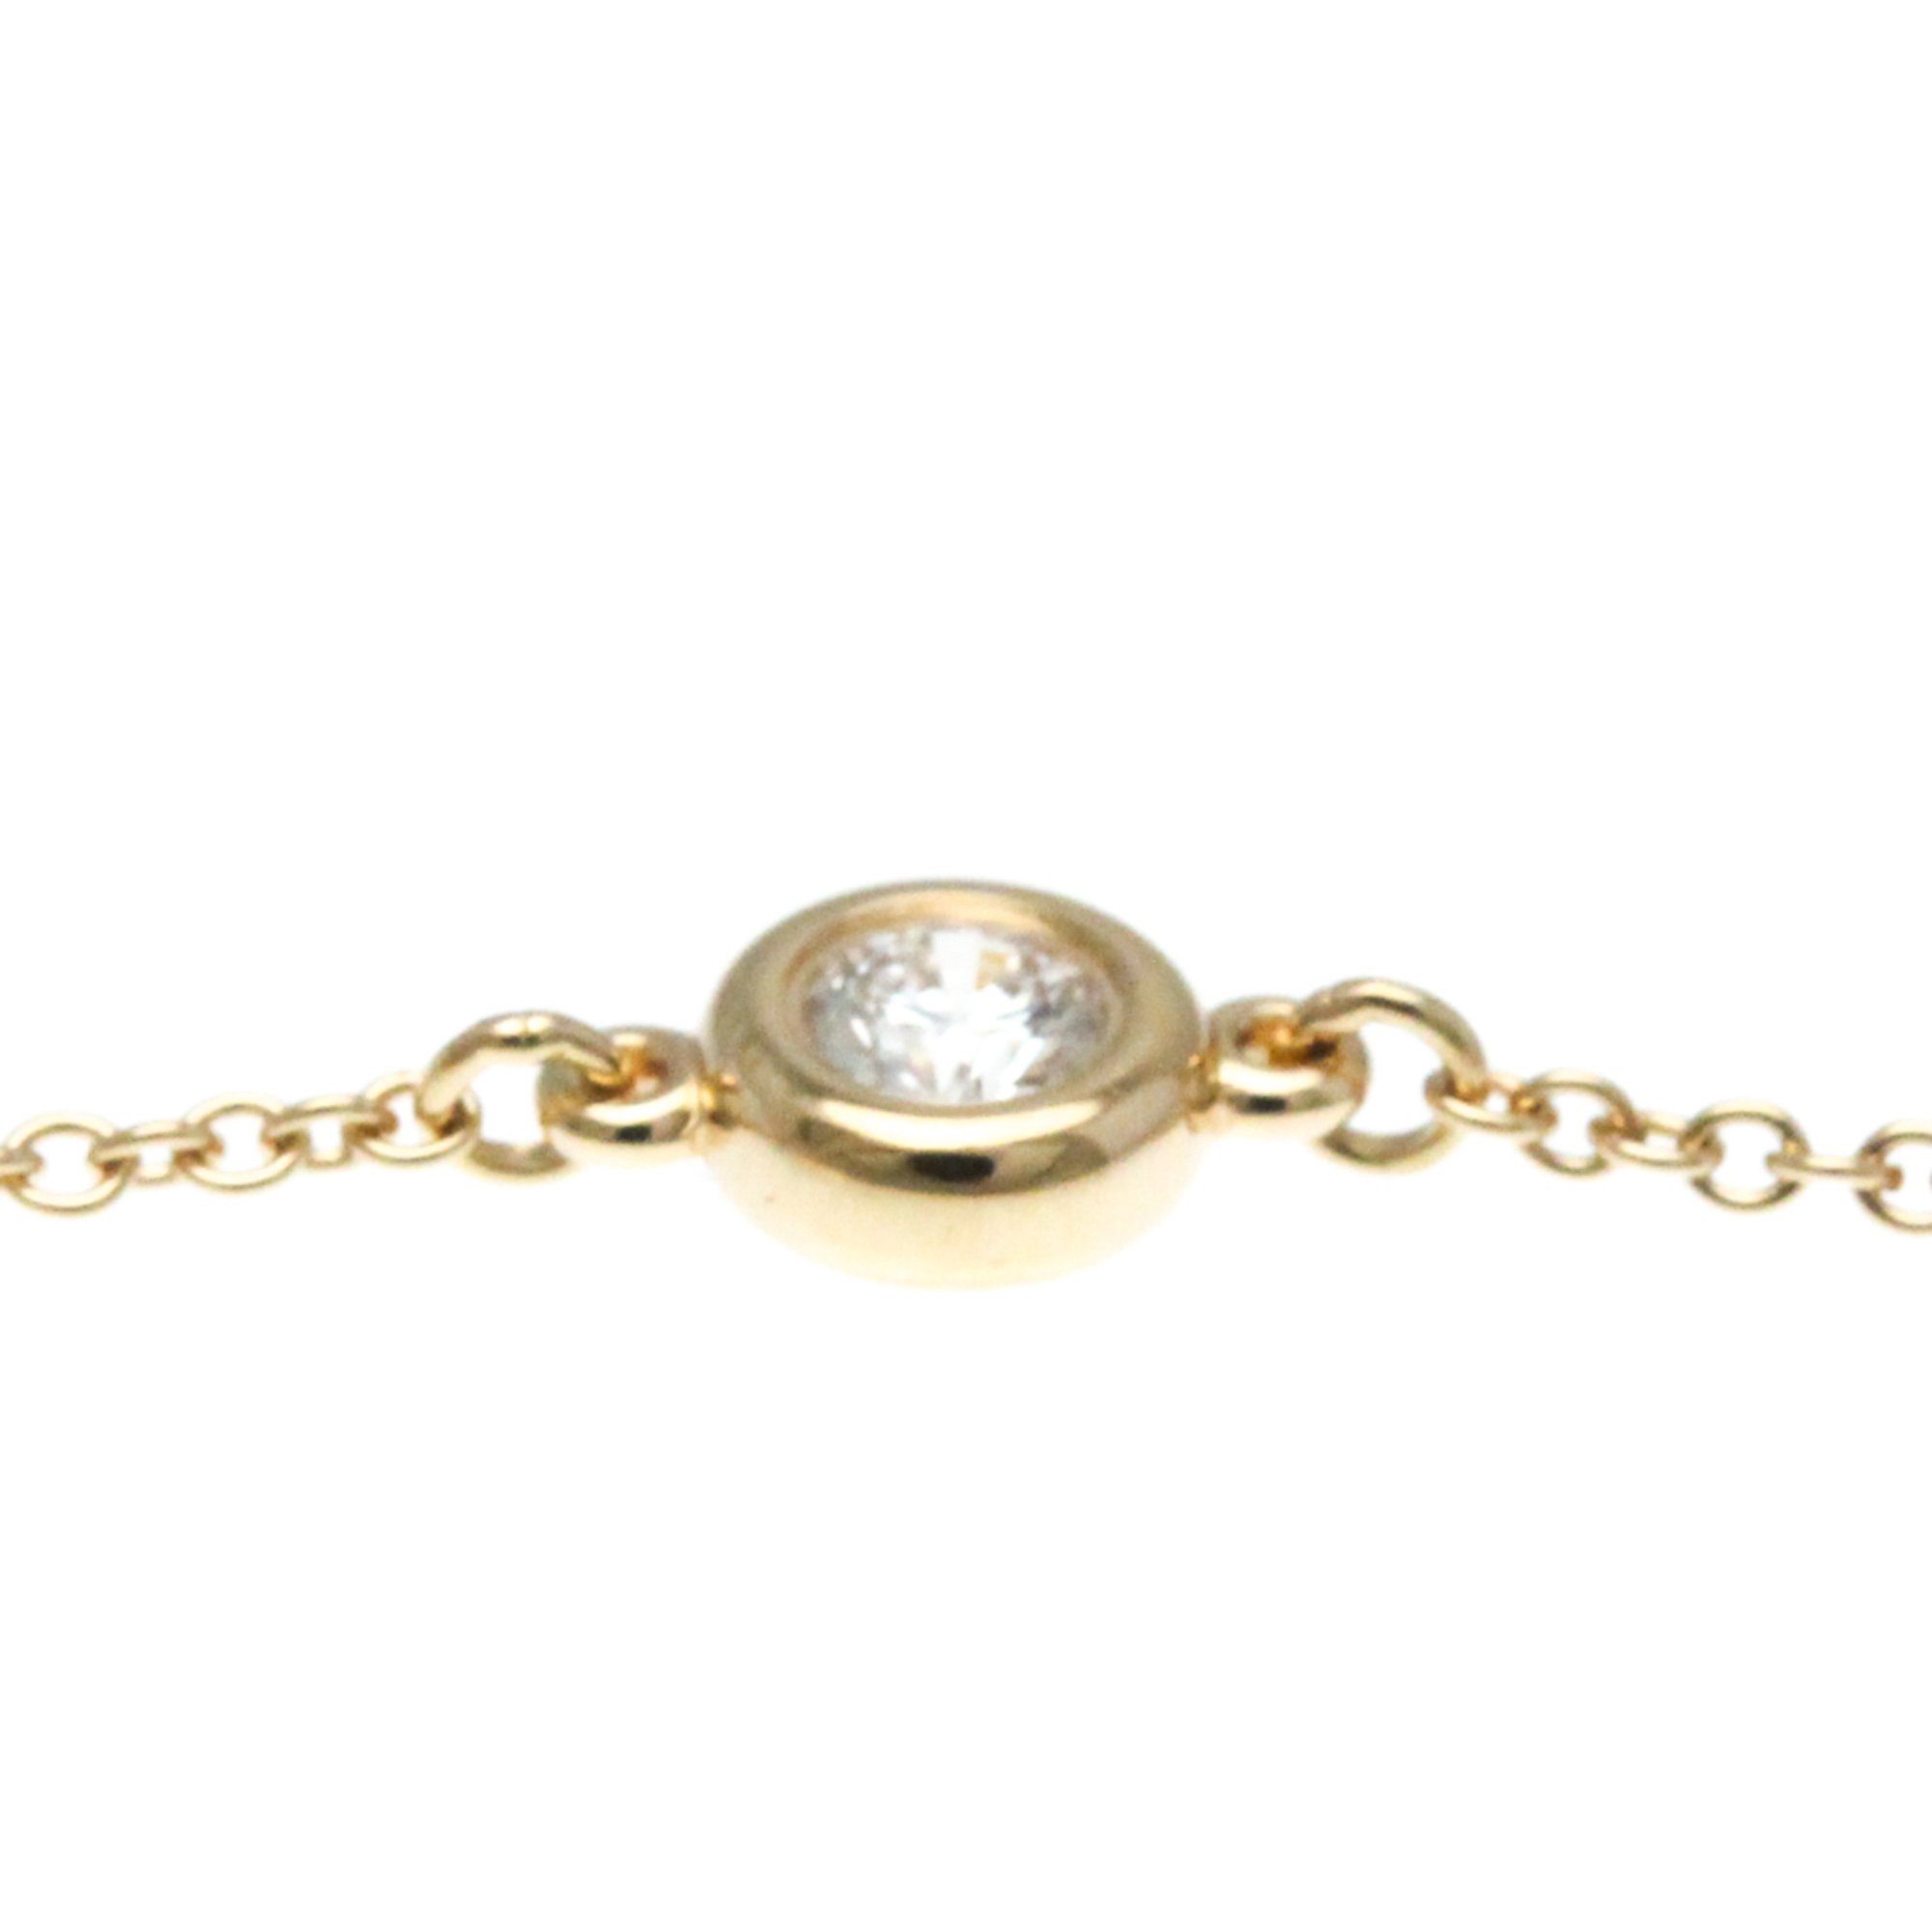 Tiffany Diamonds By The Yard Pink Gold (18K) Diamond Charm Bracelet Pink Gold